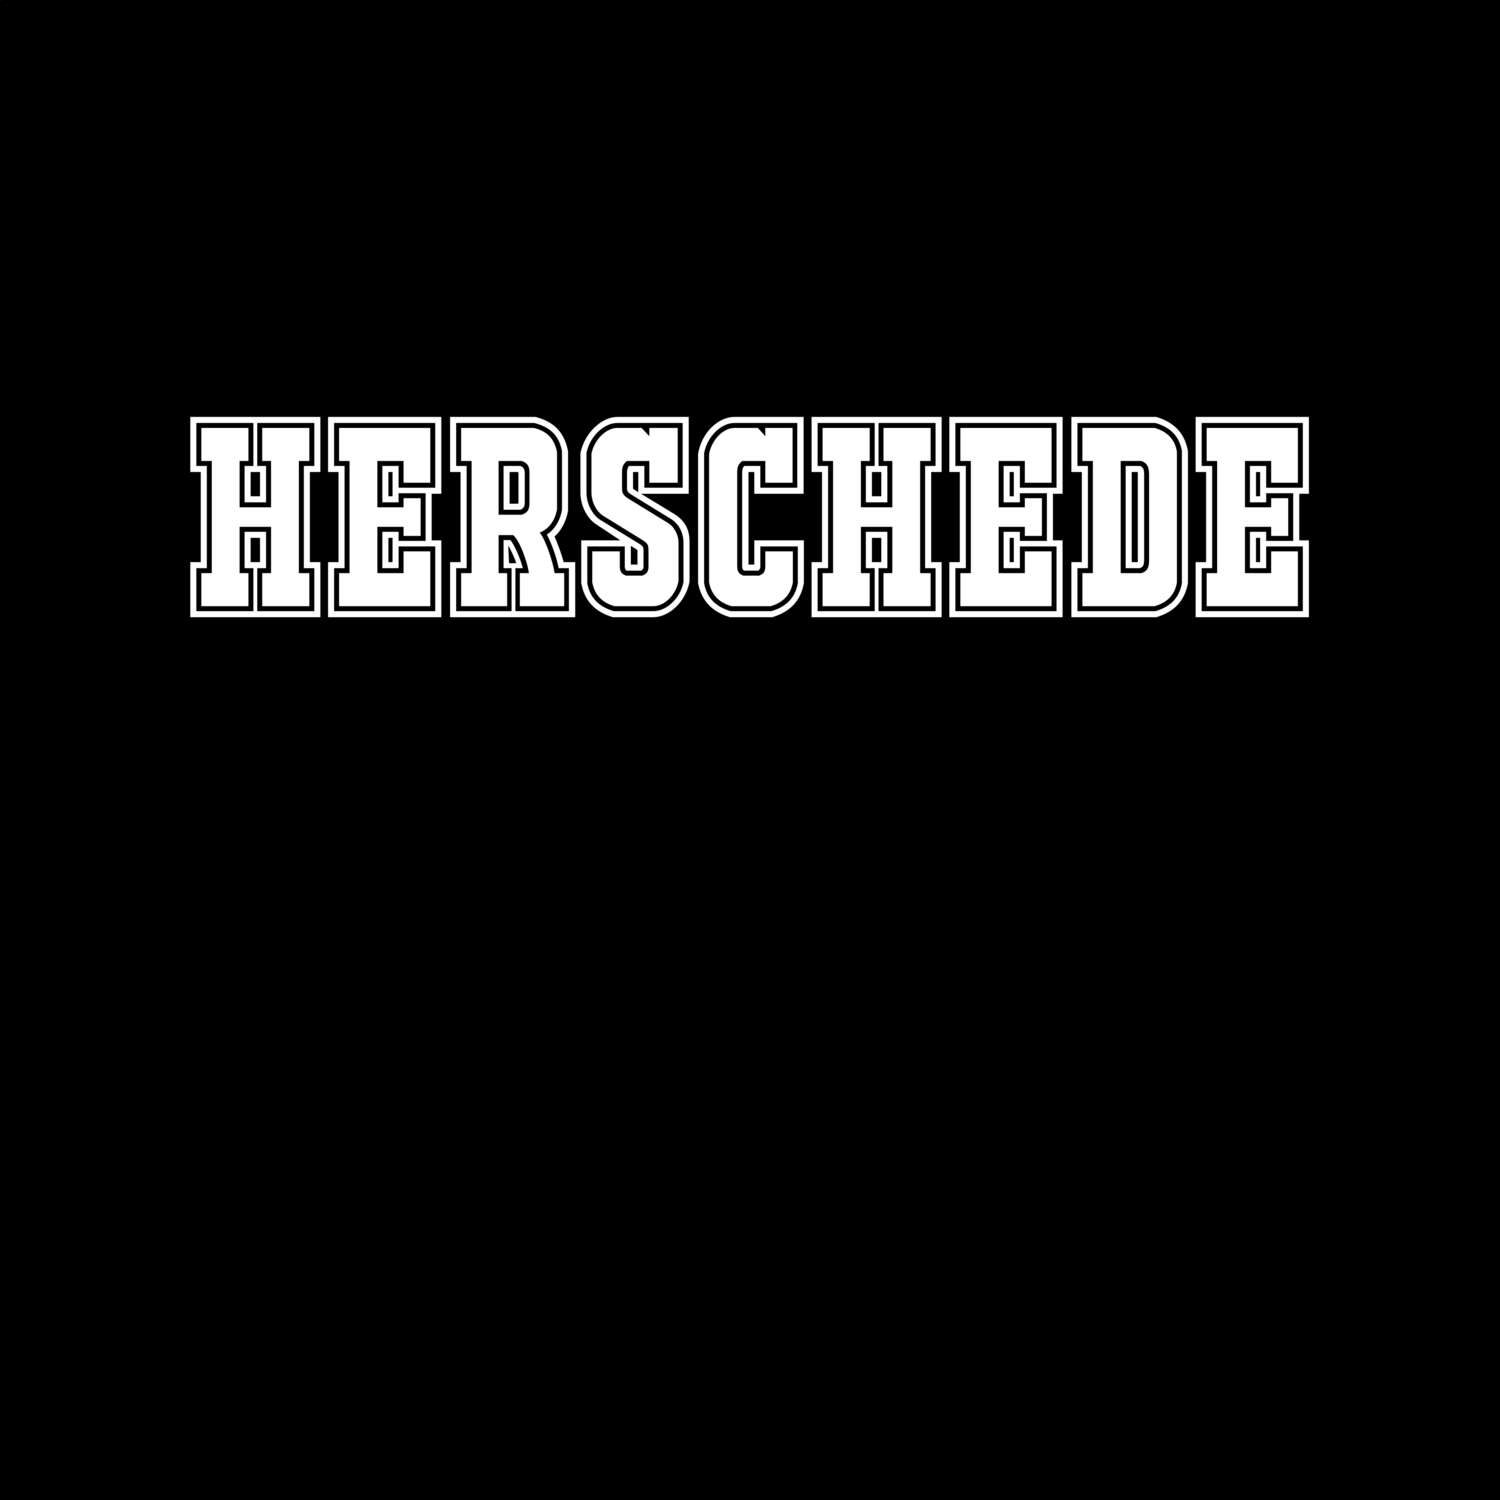 Herschede T-Shirt »Classic«